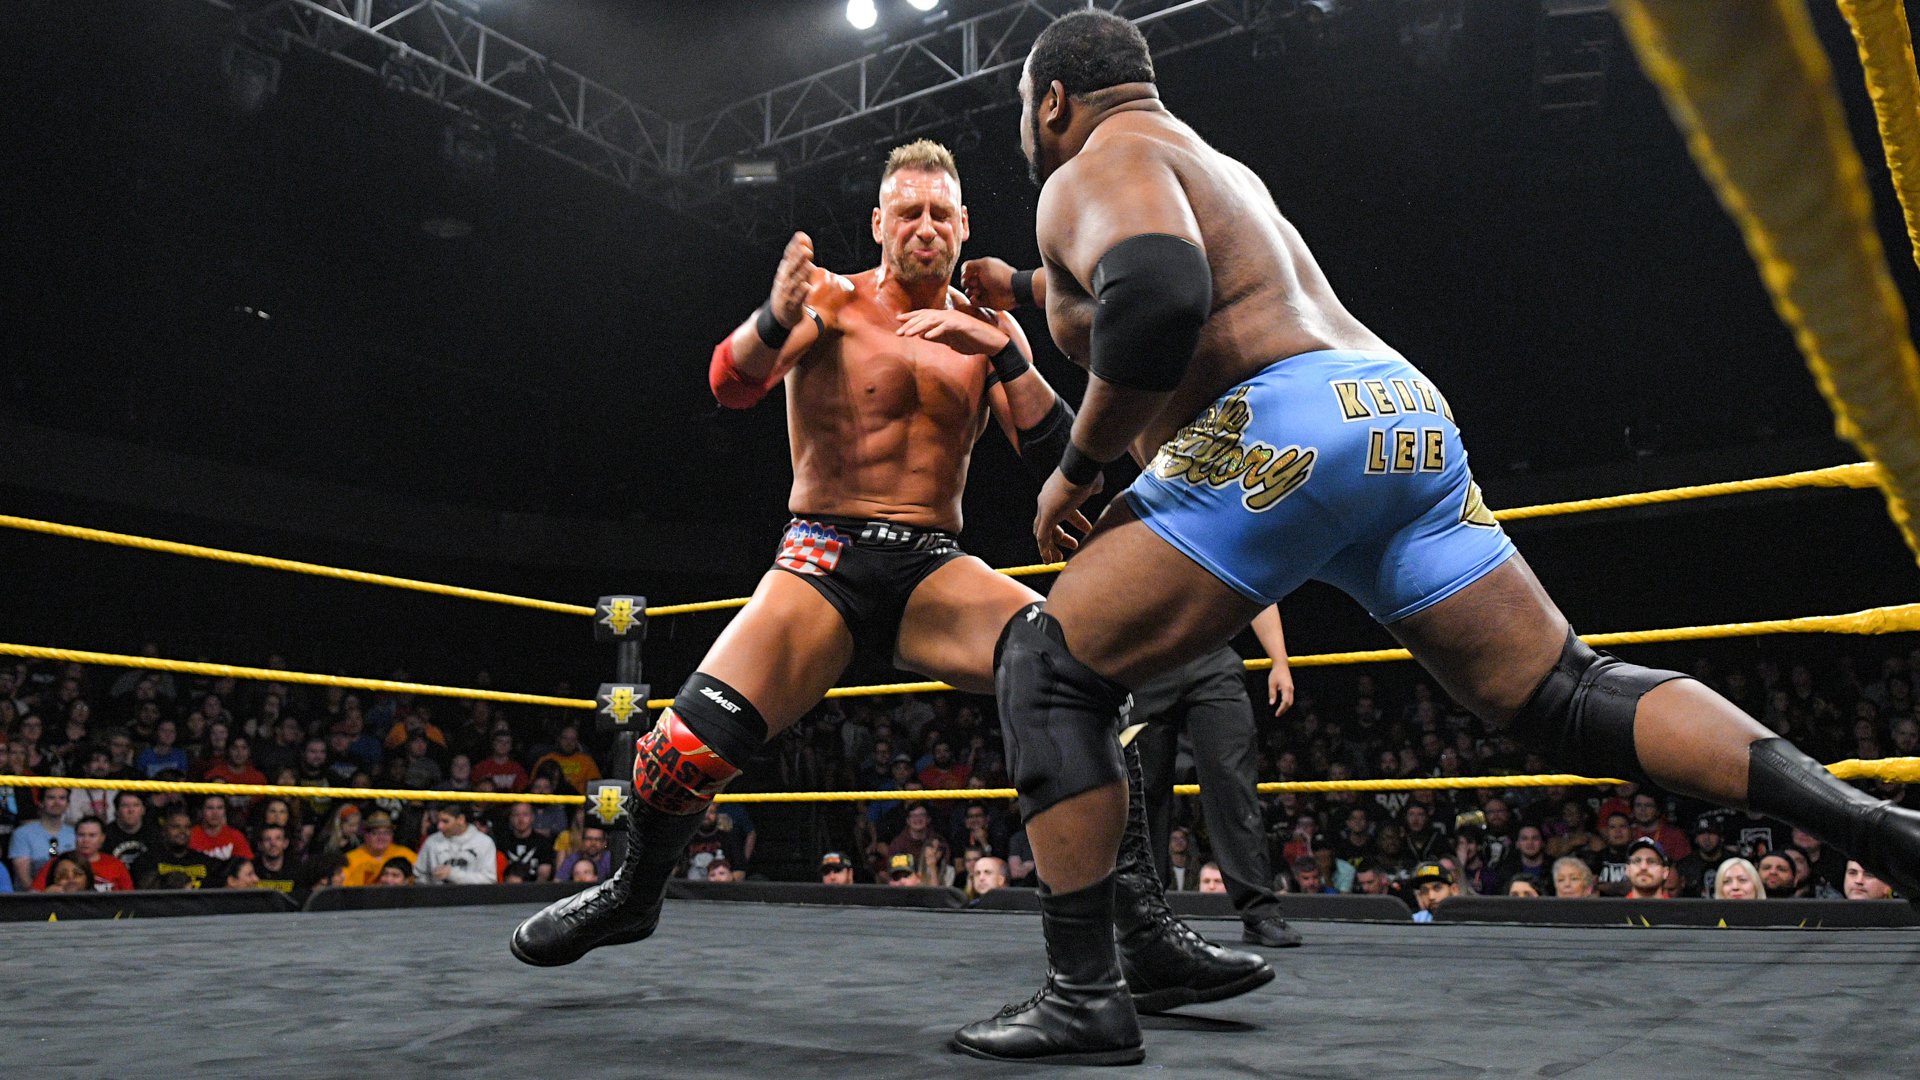 Keith Lee Dominik Dijakovic WWE NXT